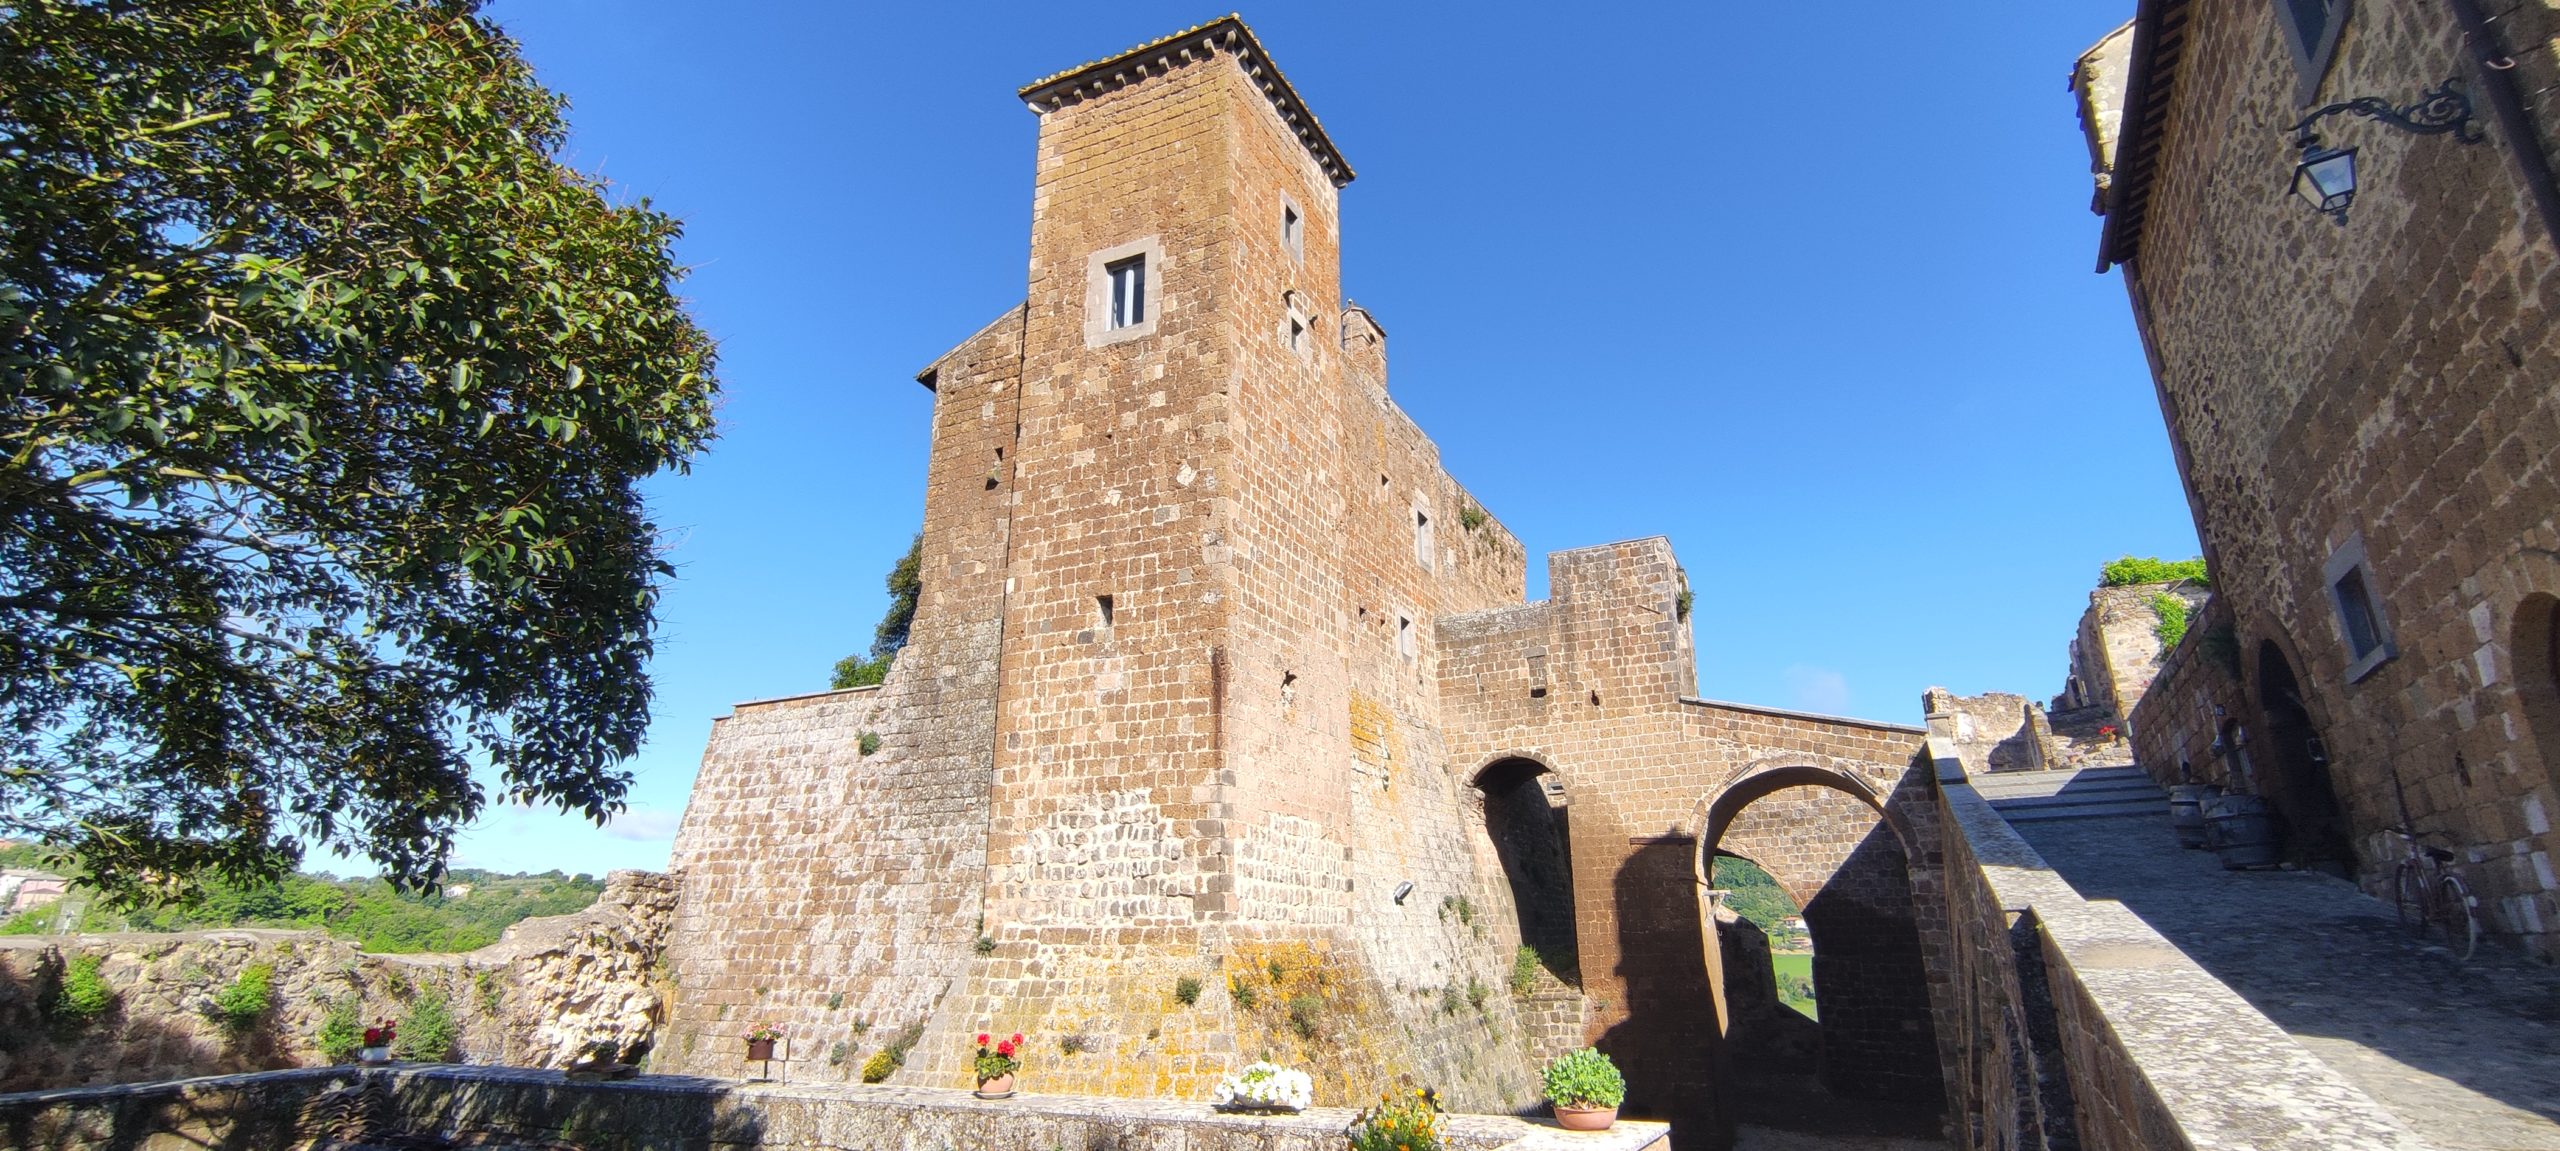 Celleno il borgo fantasma - Castello Orsini